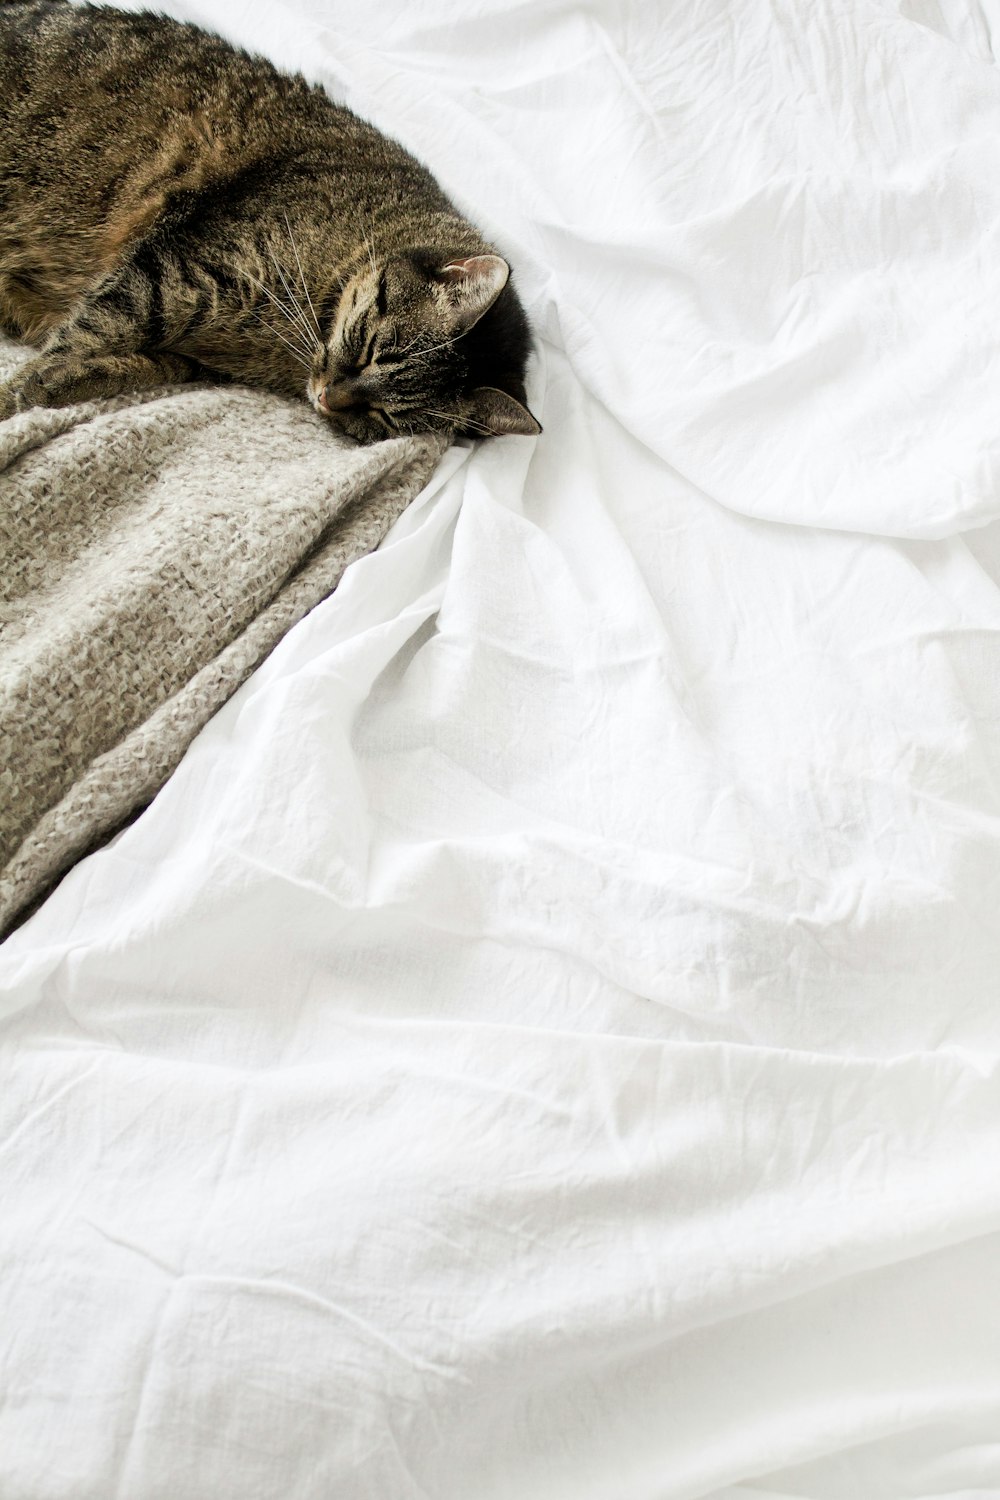 gato atigrado marrón acostado sobre tela blanca